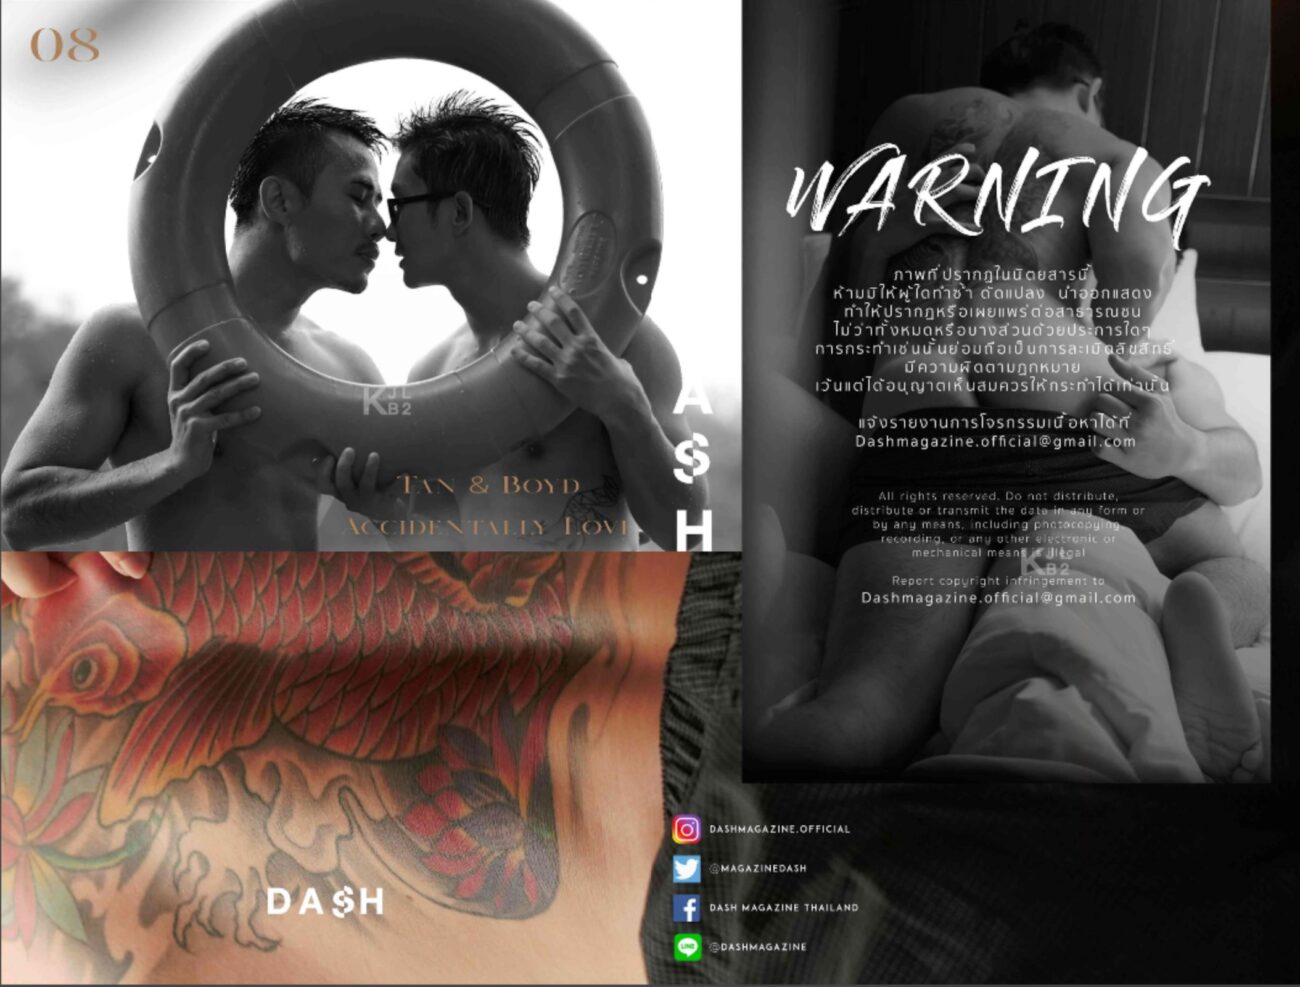 Dash Magazine No.08 Tan & Boyd ‖ R+【PHOTO】